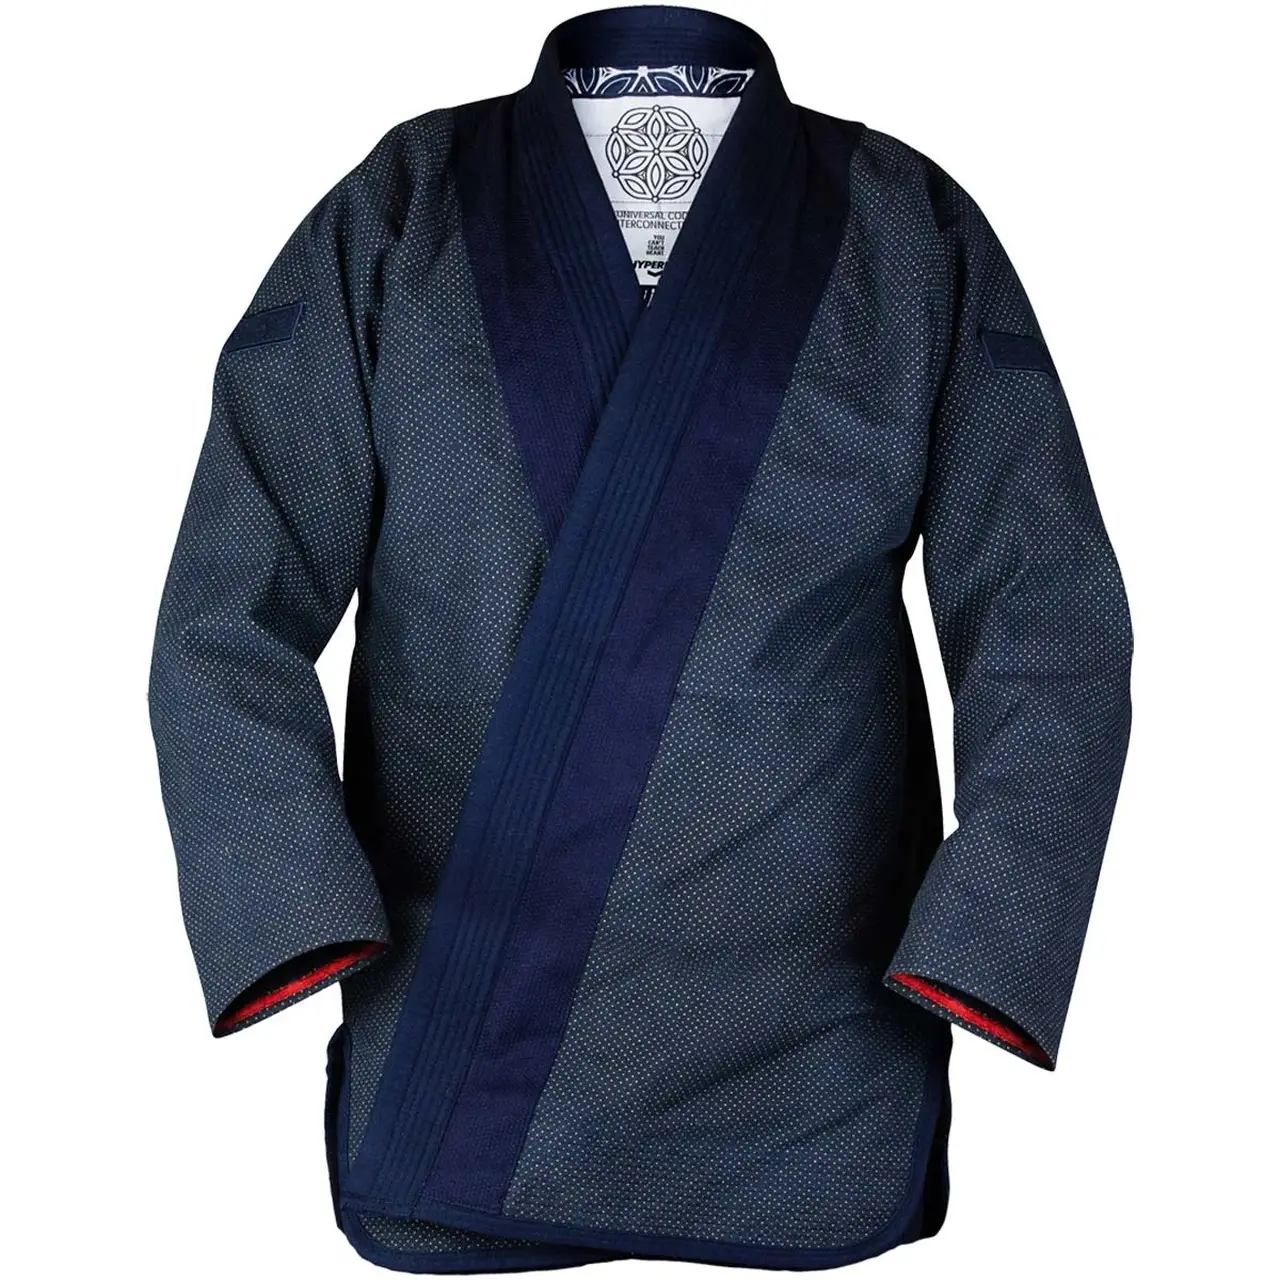 Униформа для дзюдо и дзюдо/карате Ги/карате куртки производитель Сиалкот пакистанский винор Спорт